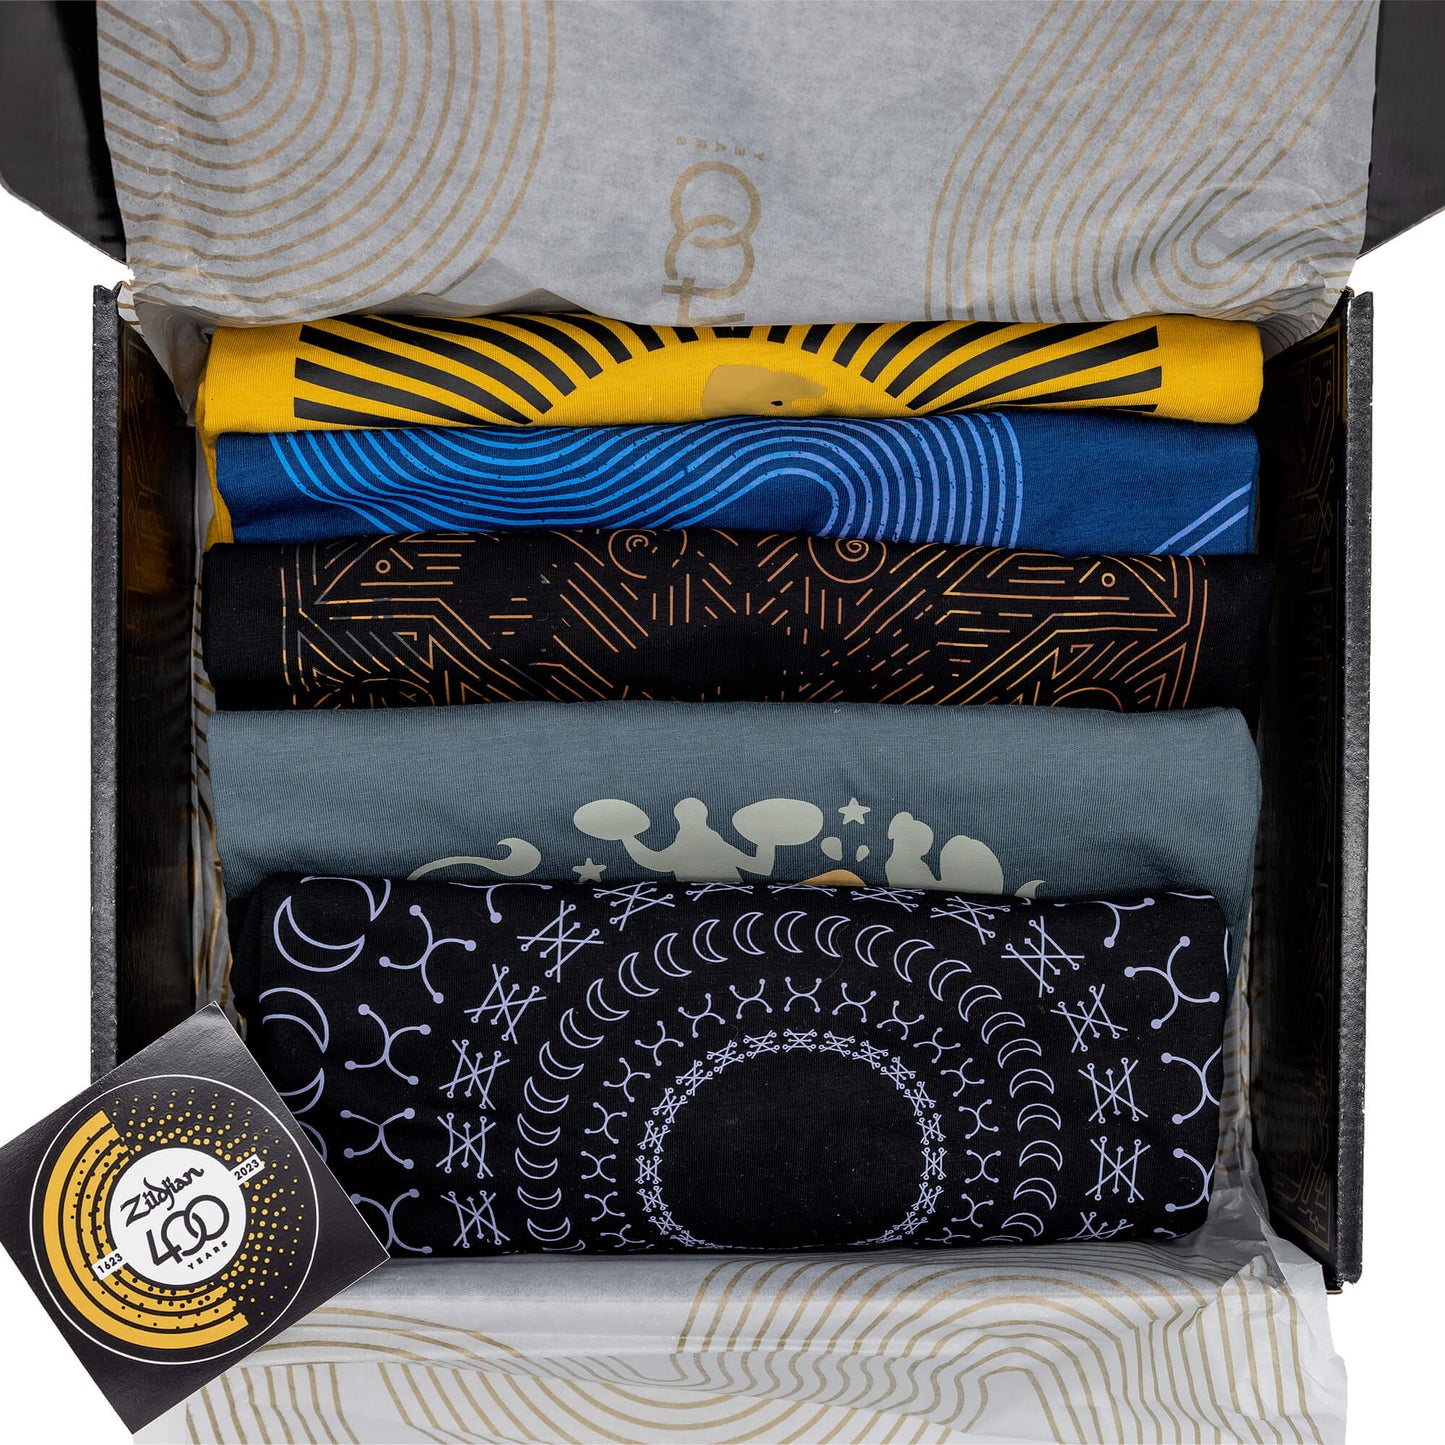 Zildjian Limited Edition 400th Anniversary T-Shirt Box Set